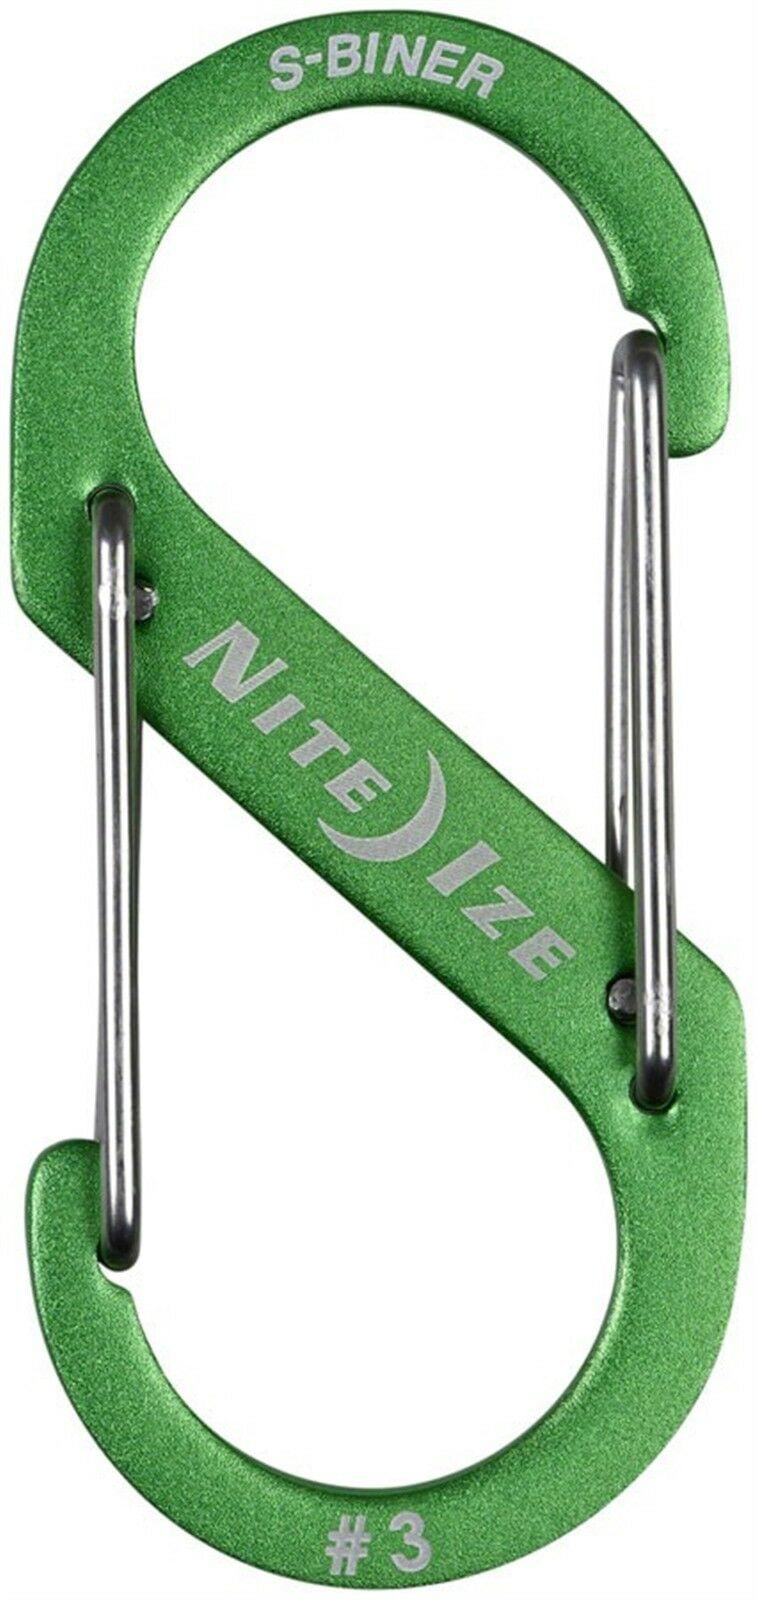 Nite Ize S-Biner SlideLock #3 Aluminum Lime Green Locking Dual-Gated Carabiner 